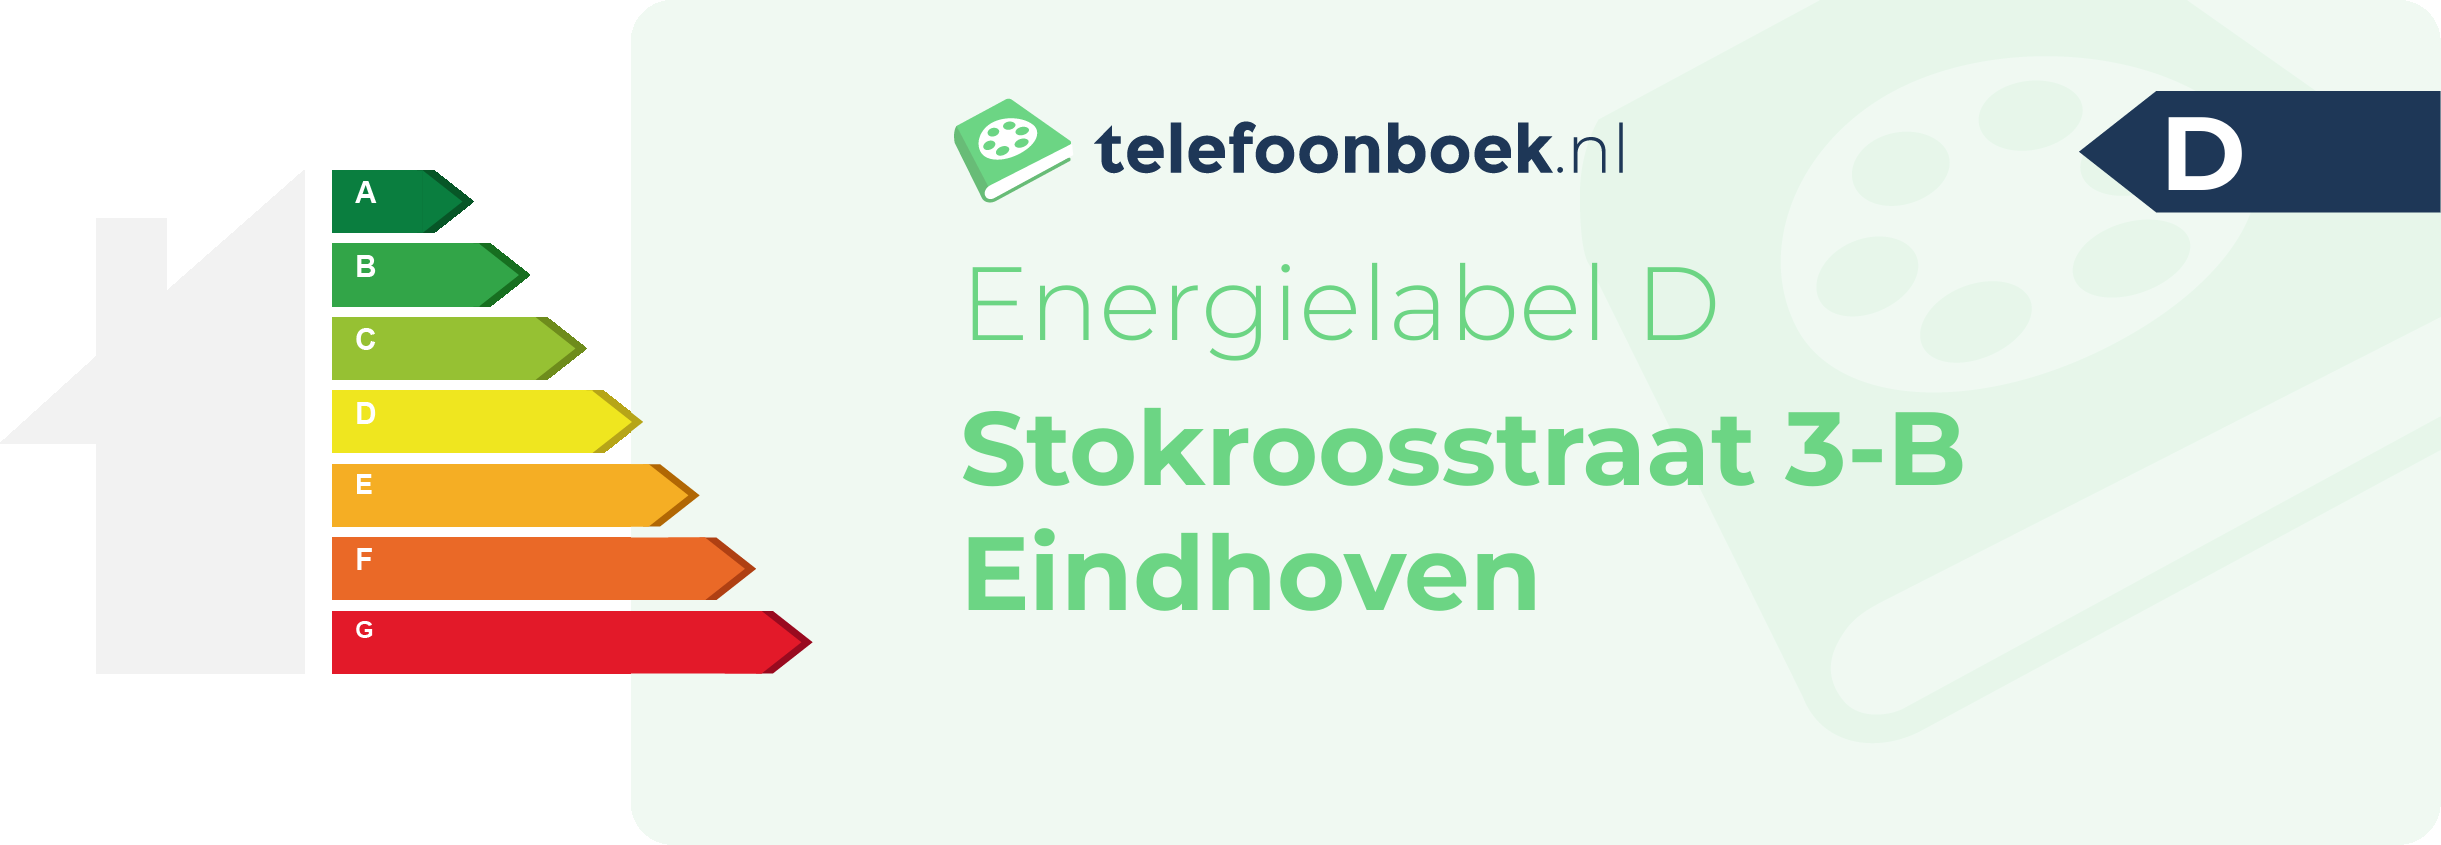 Energielabel Stokroosstraat 3-B Eindhoven